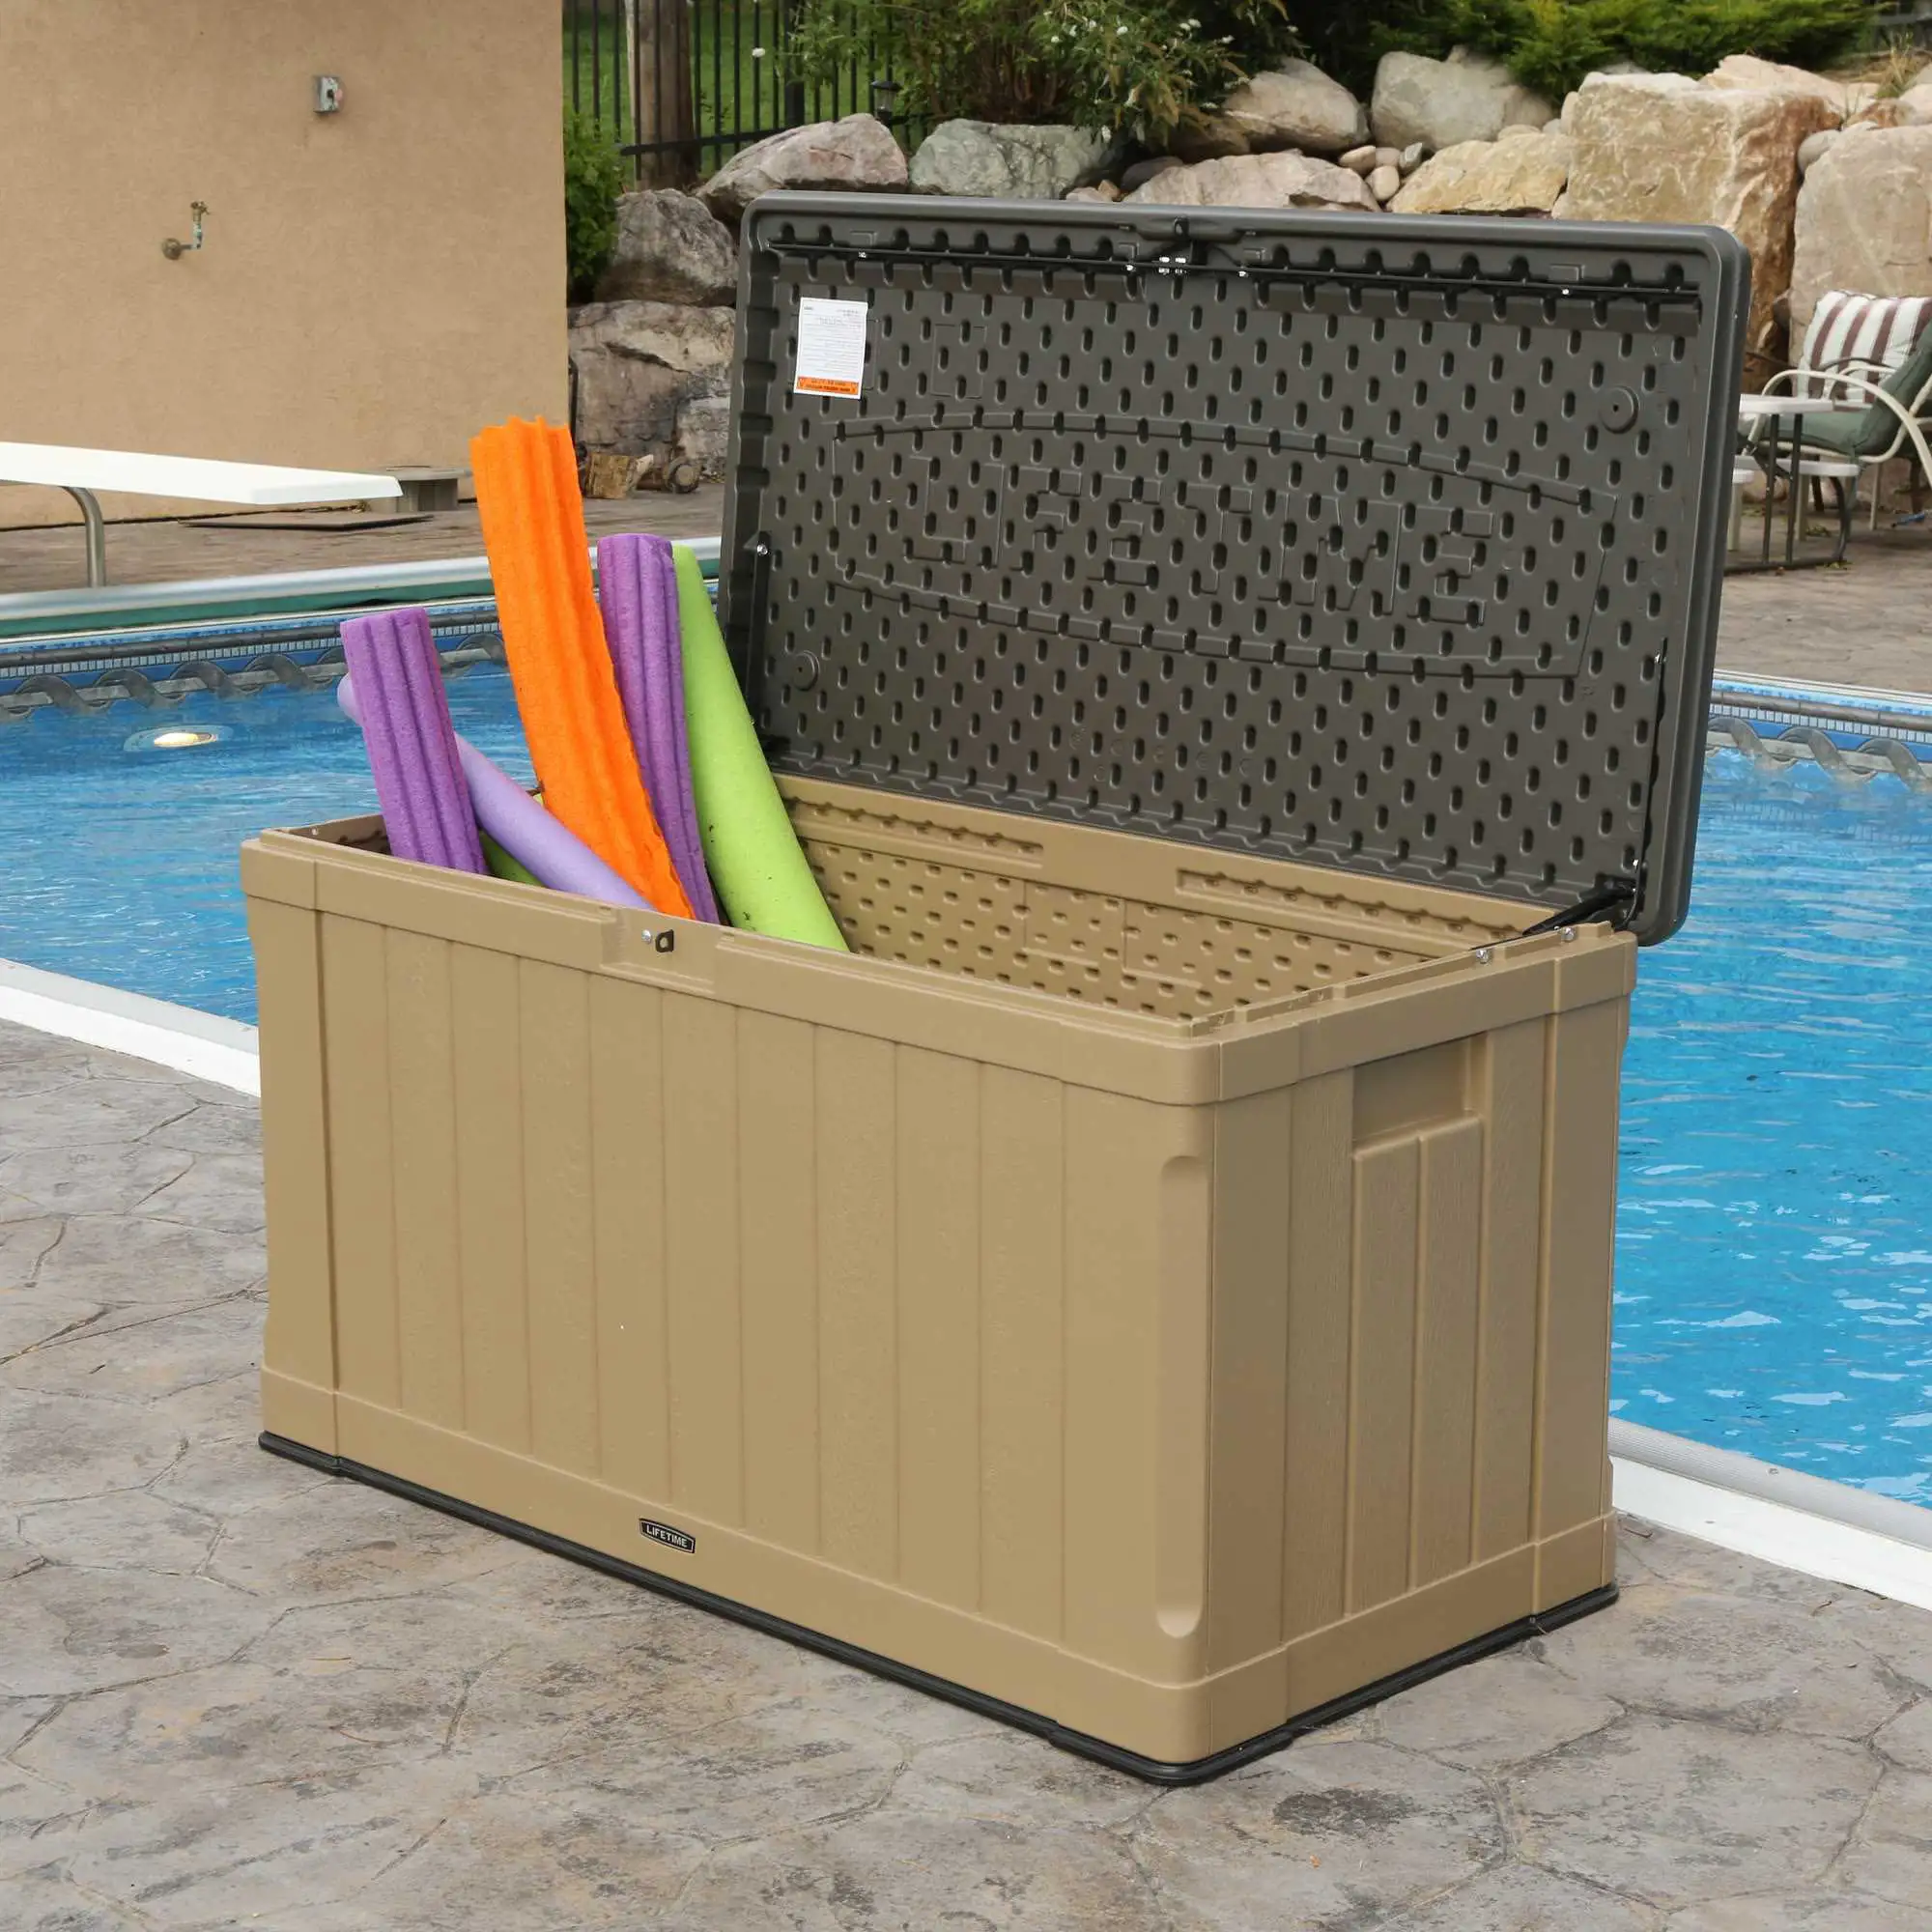 Lifetime 116 Gallon Outdoor Organizer Storage Pool & Patio Deck Box Bench, Beige | eBay